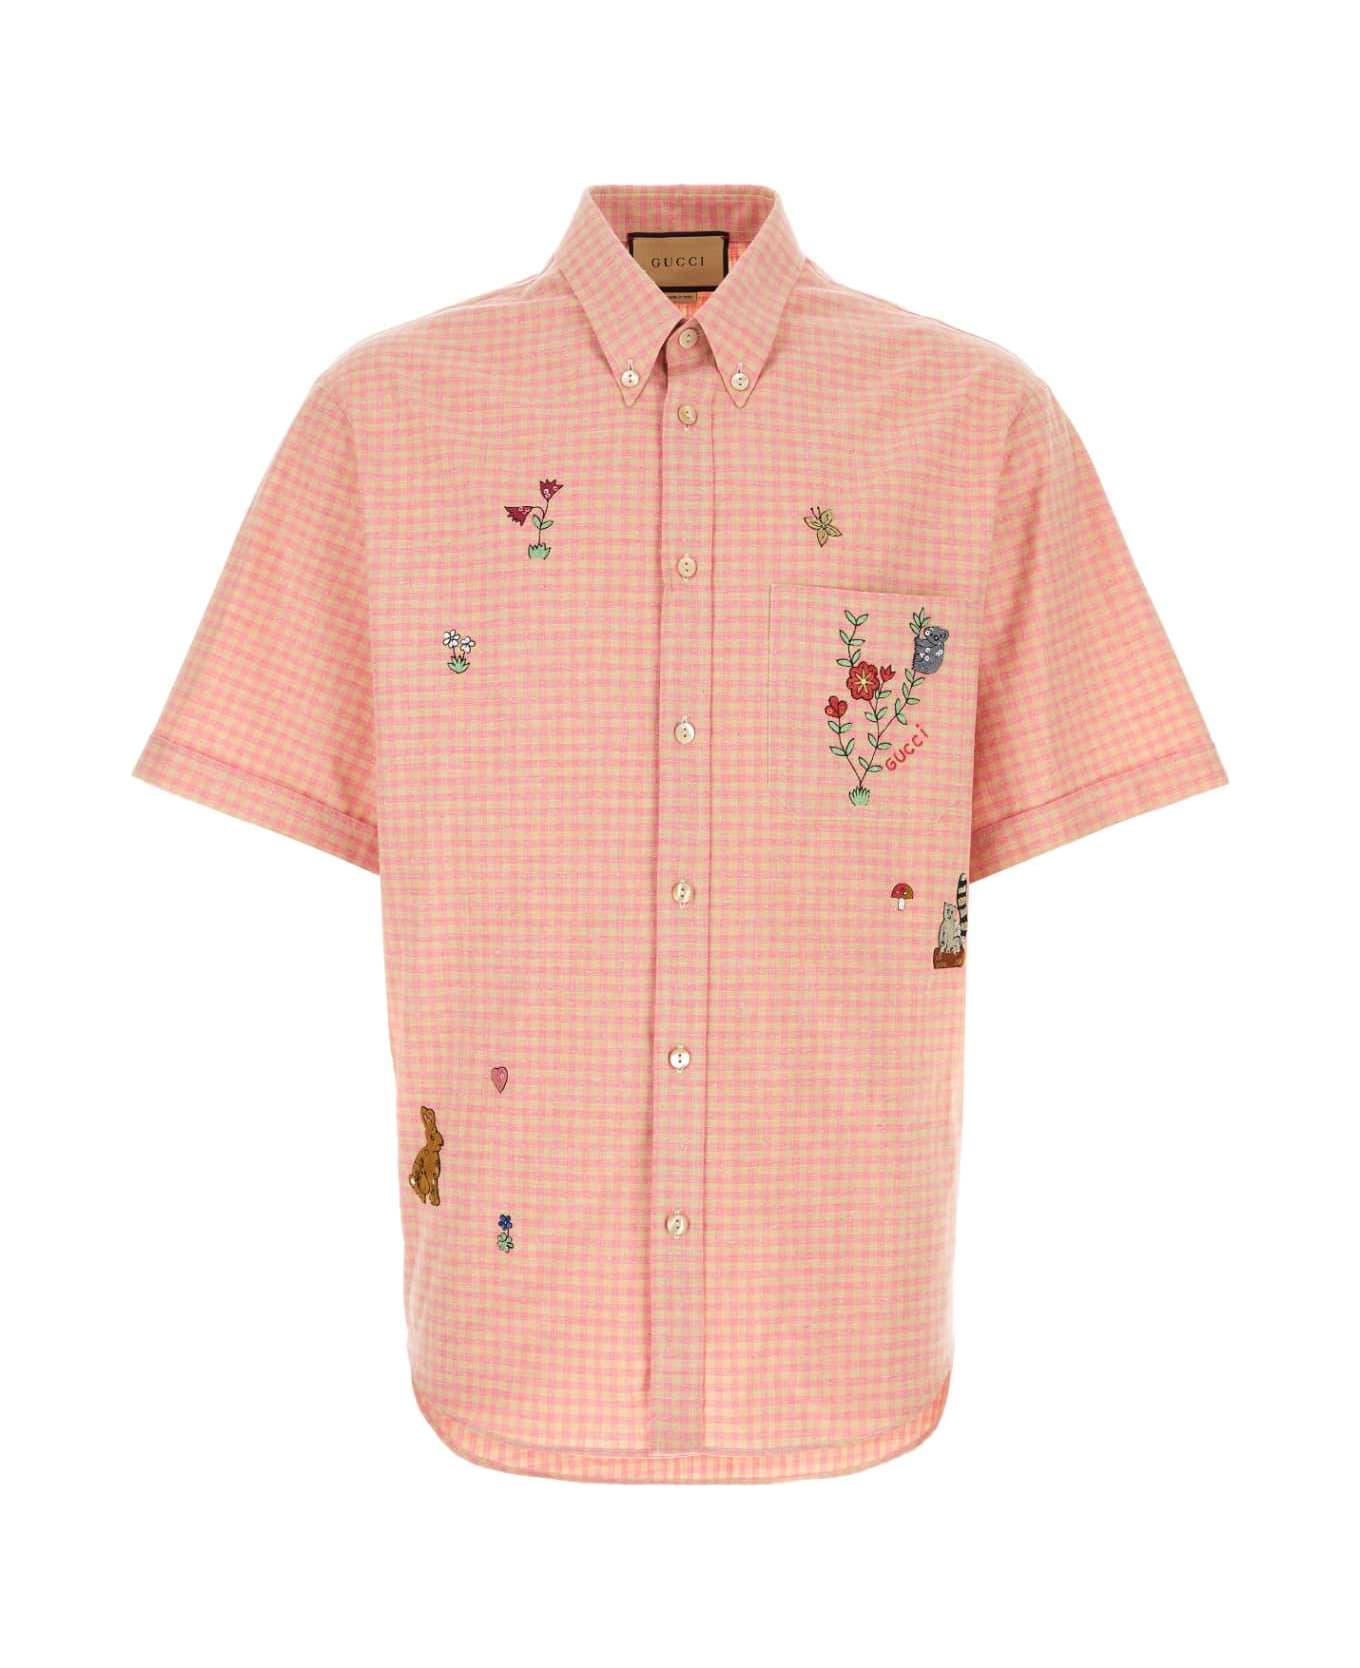 Gucci Embroidered Cotton Shirt - PINK/BEIGE/MIX